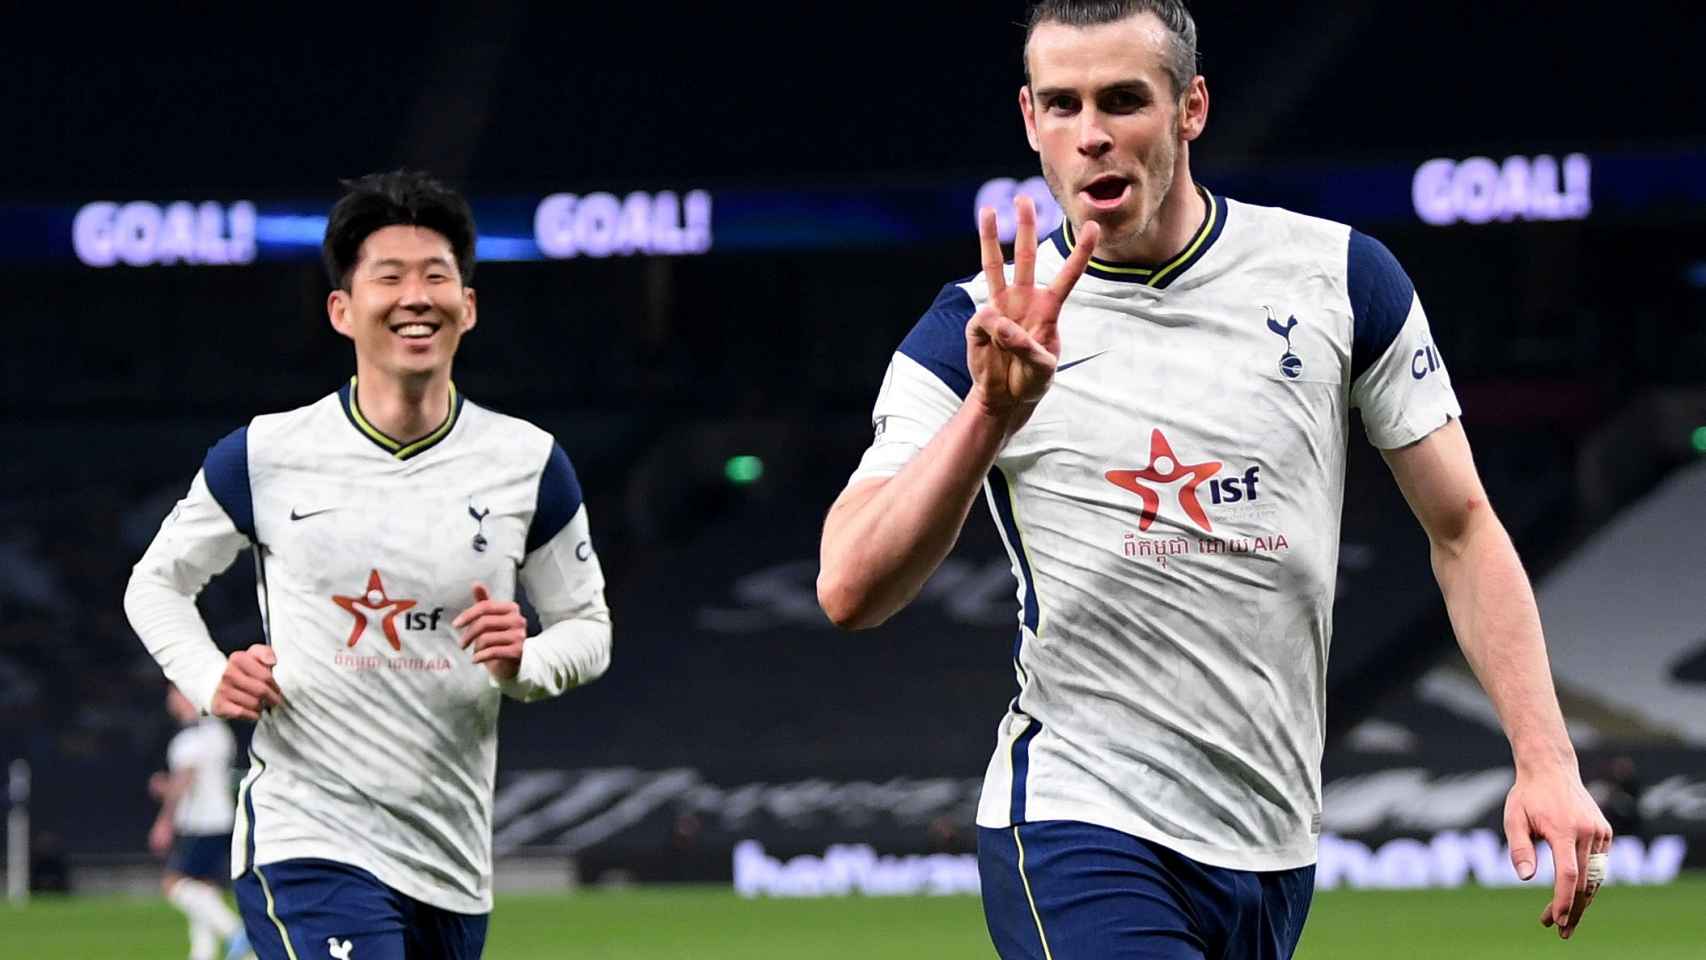 Gareth Bale celebra su hat-trick con el Tottenham